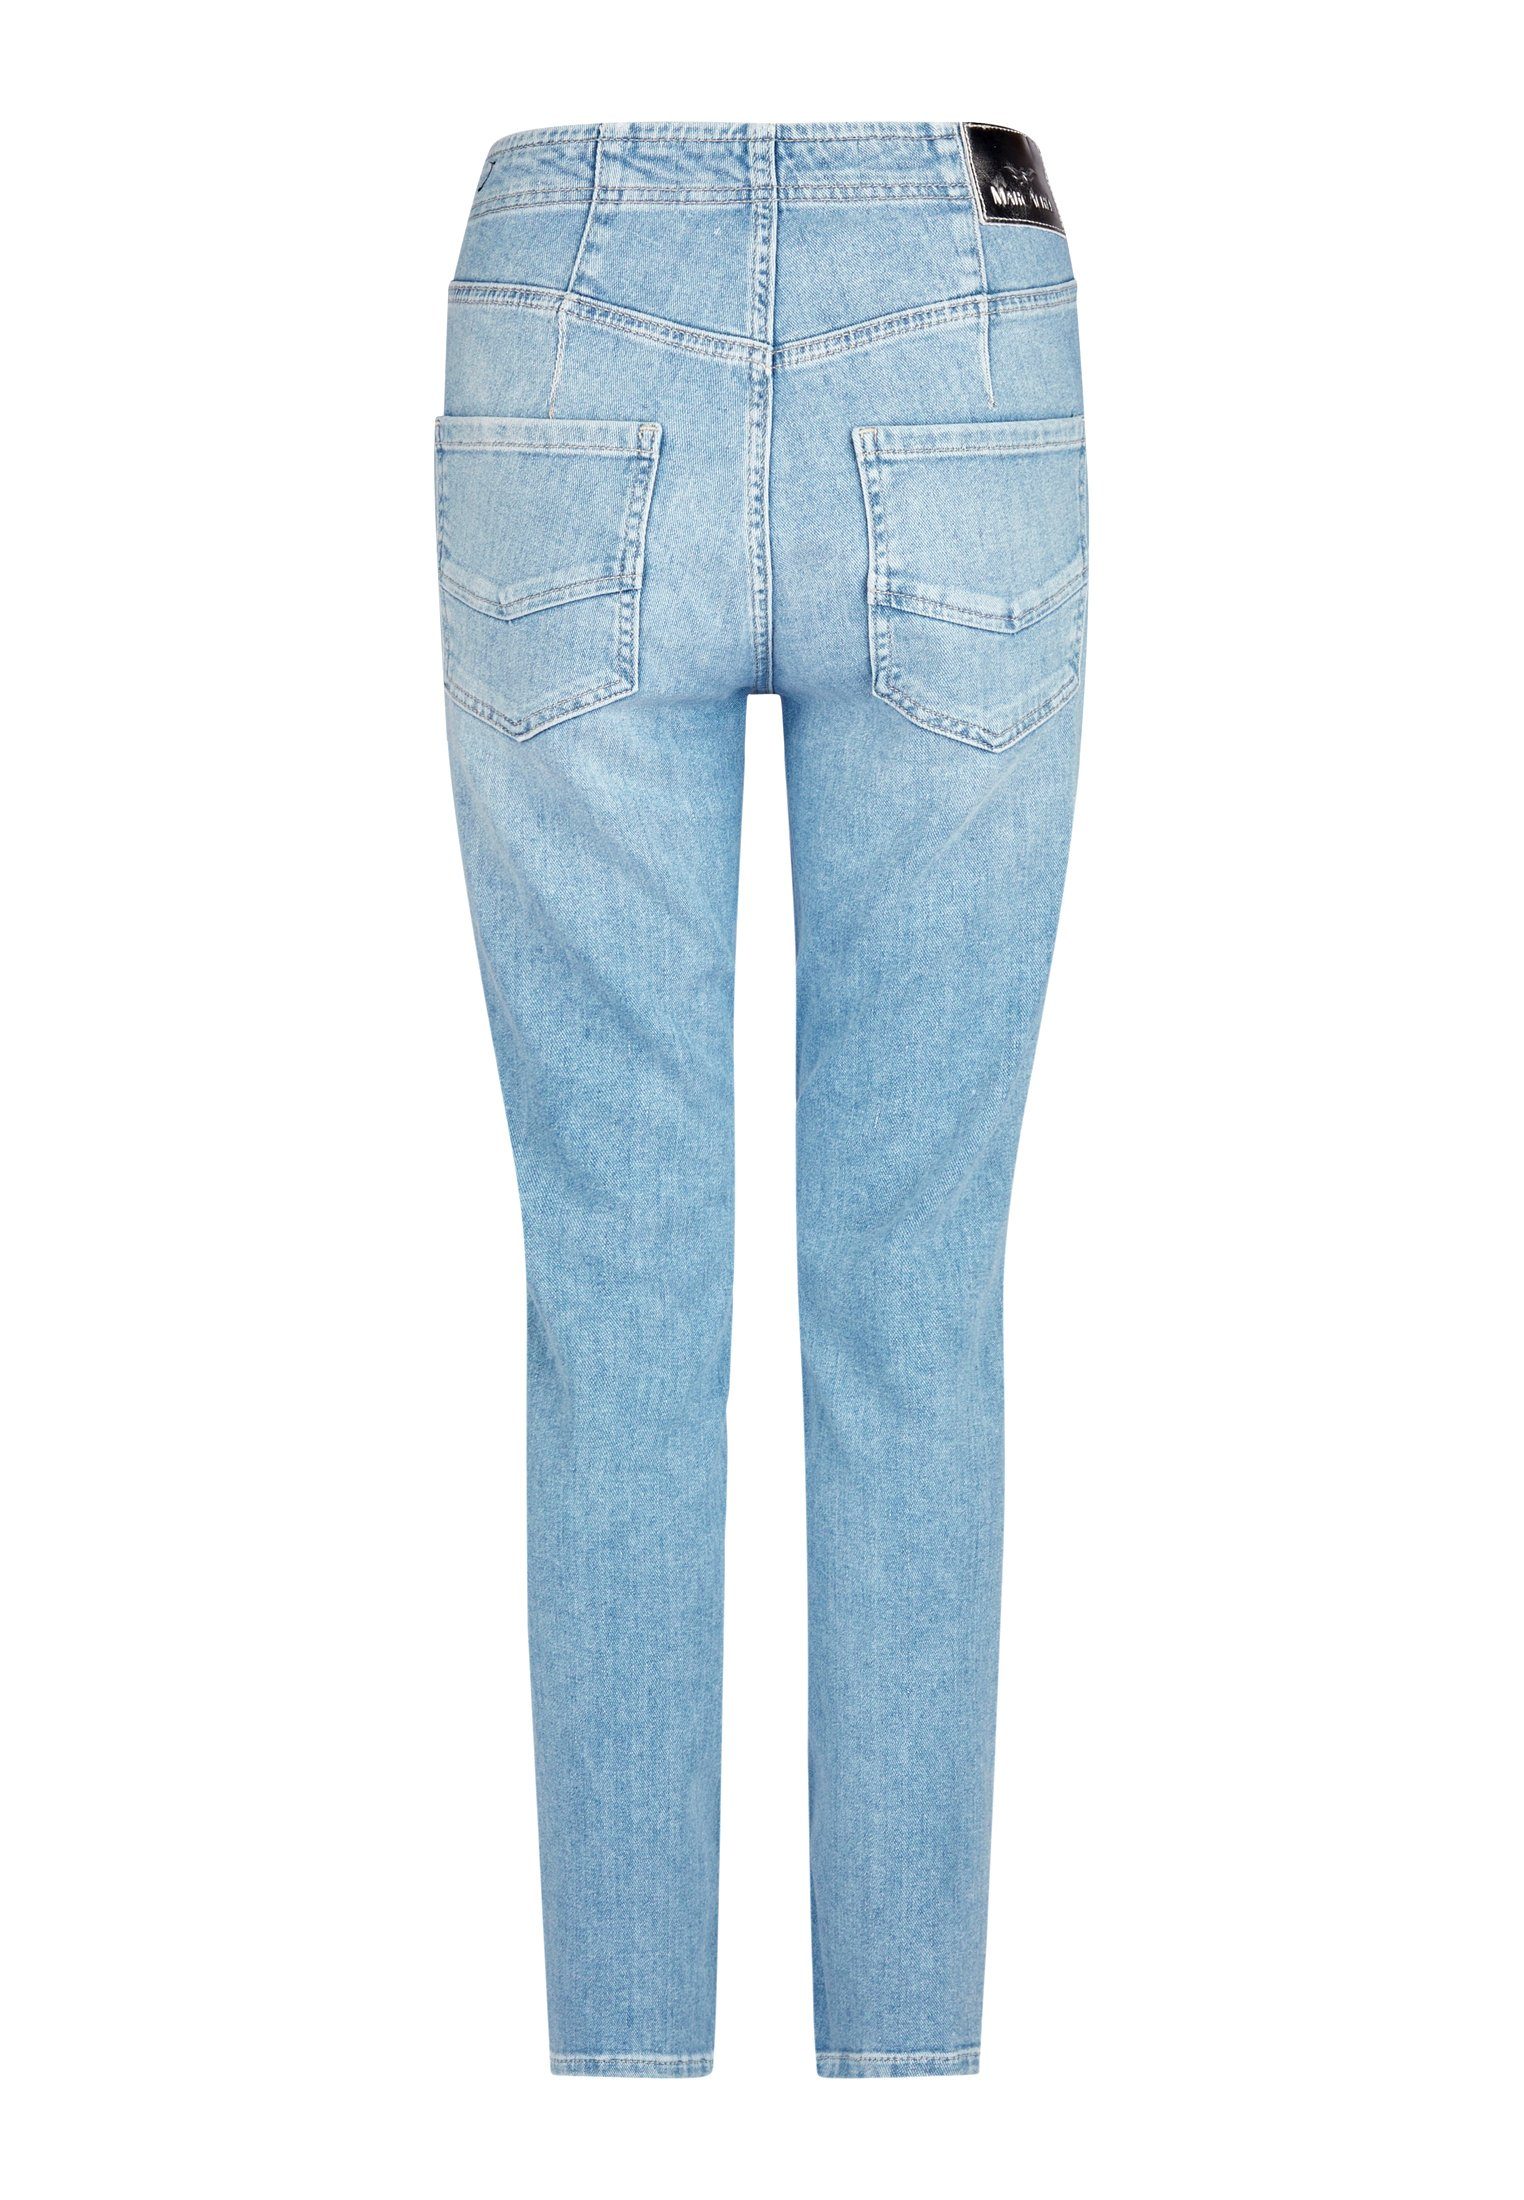 AUREL Skinny-fit-Jeans in MARC Blue Denim